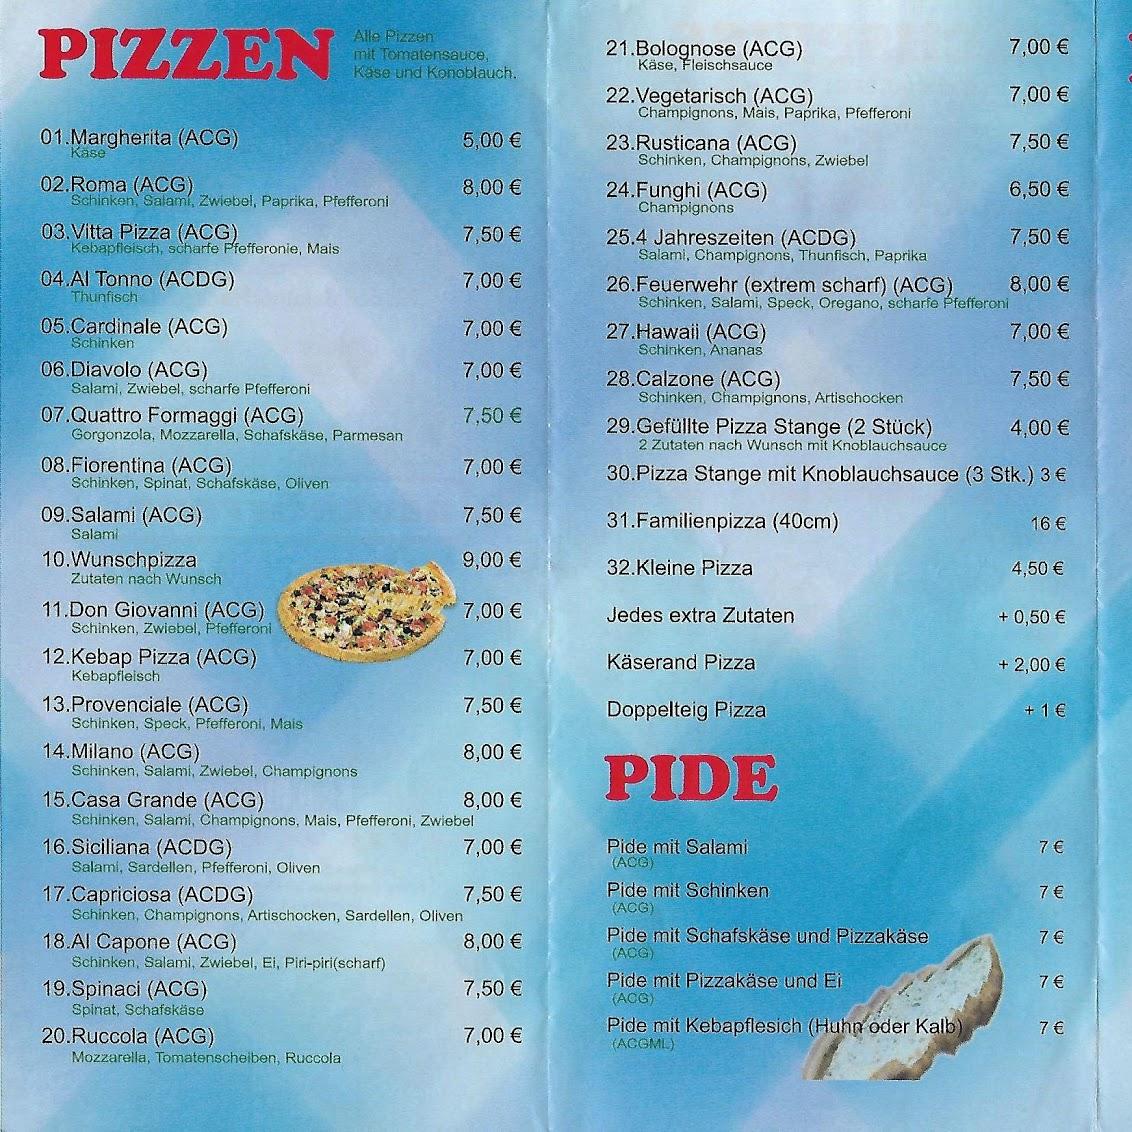 Restaurant "Pizza Vitta" in Pitten